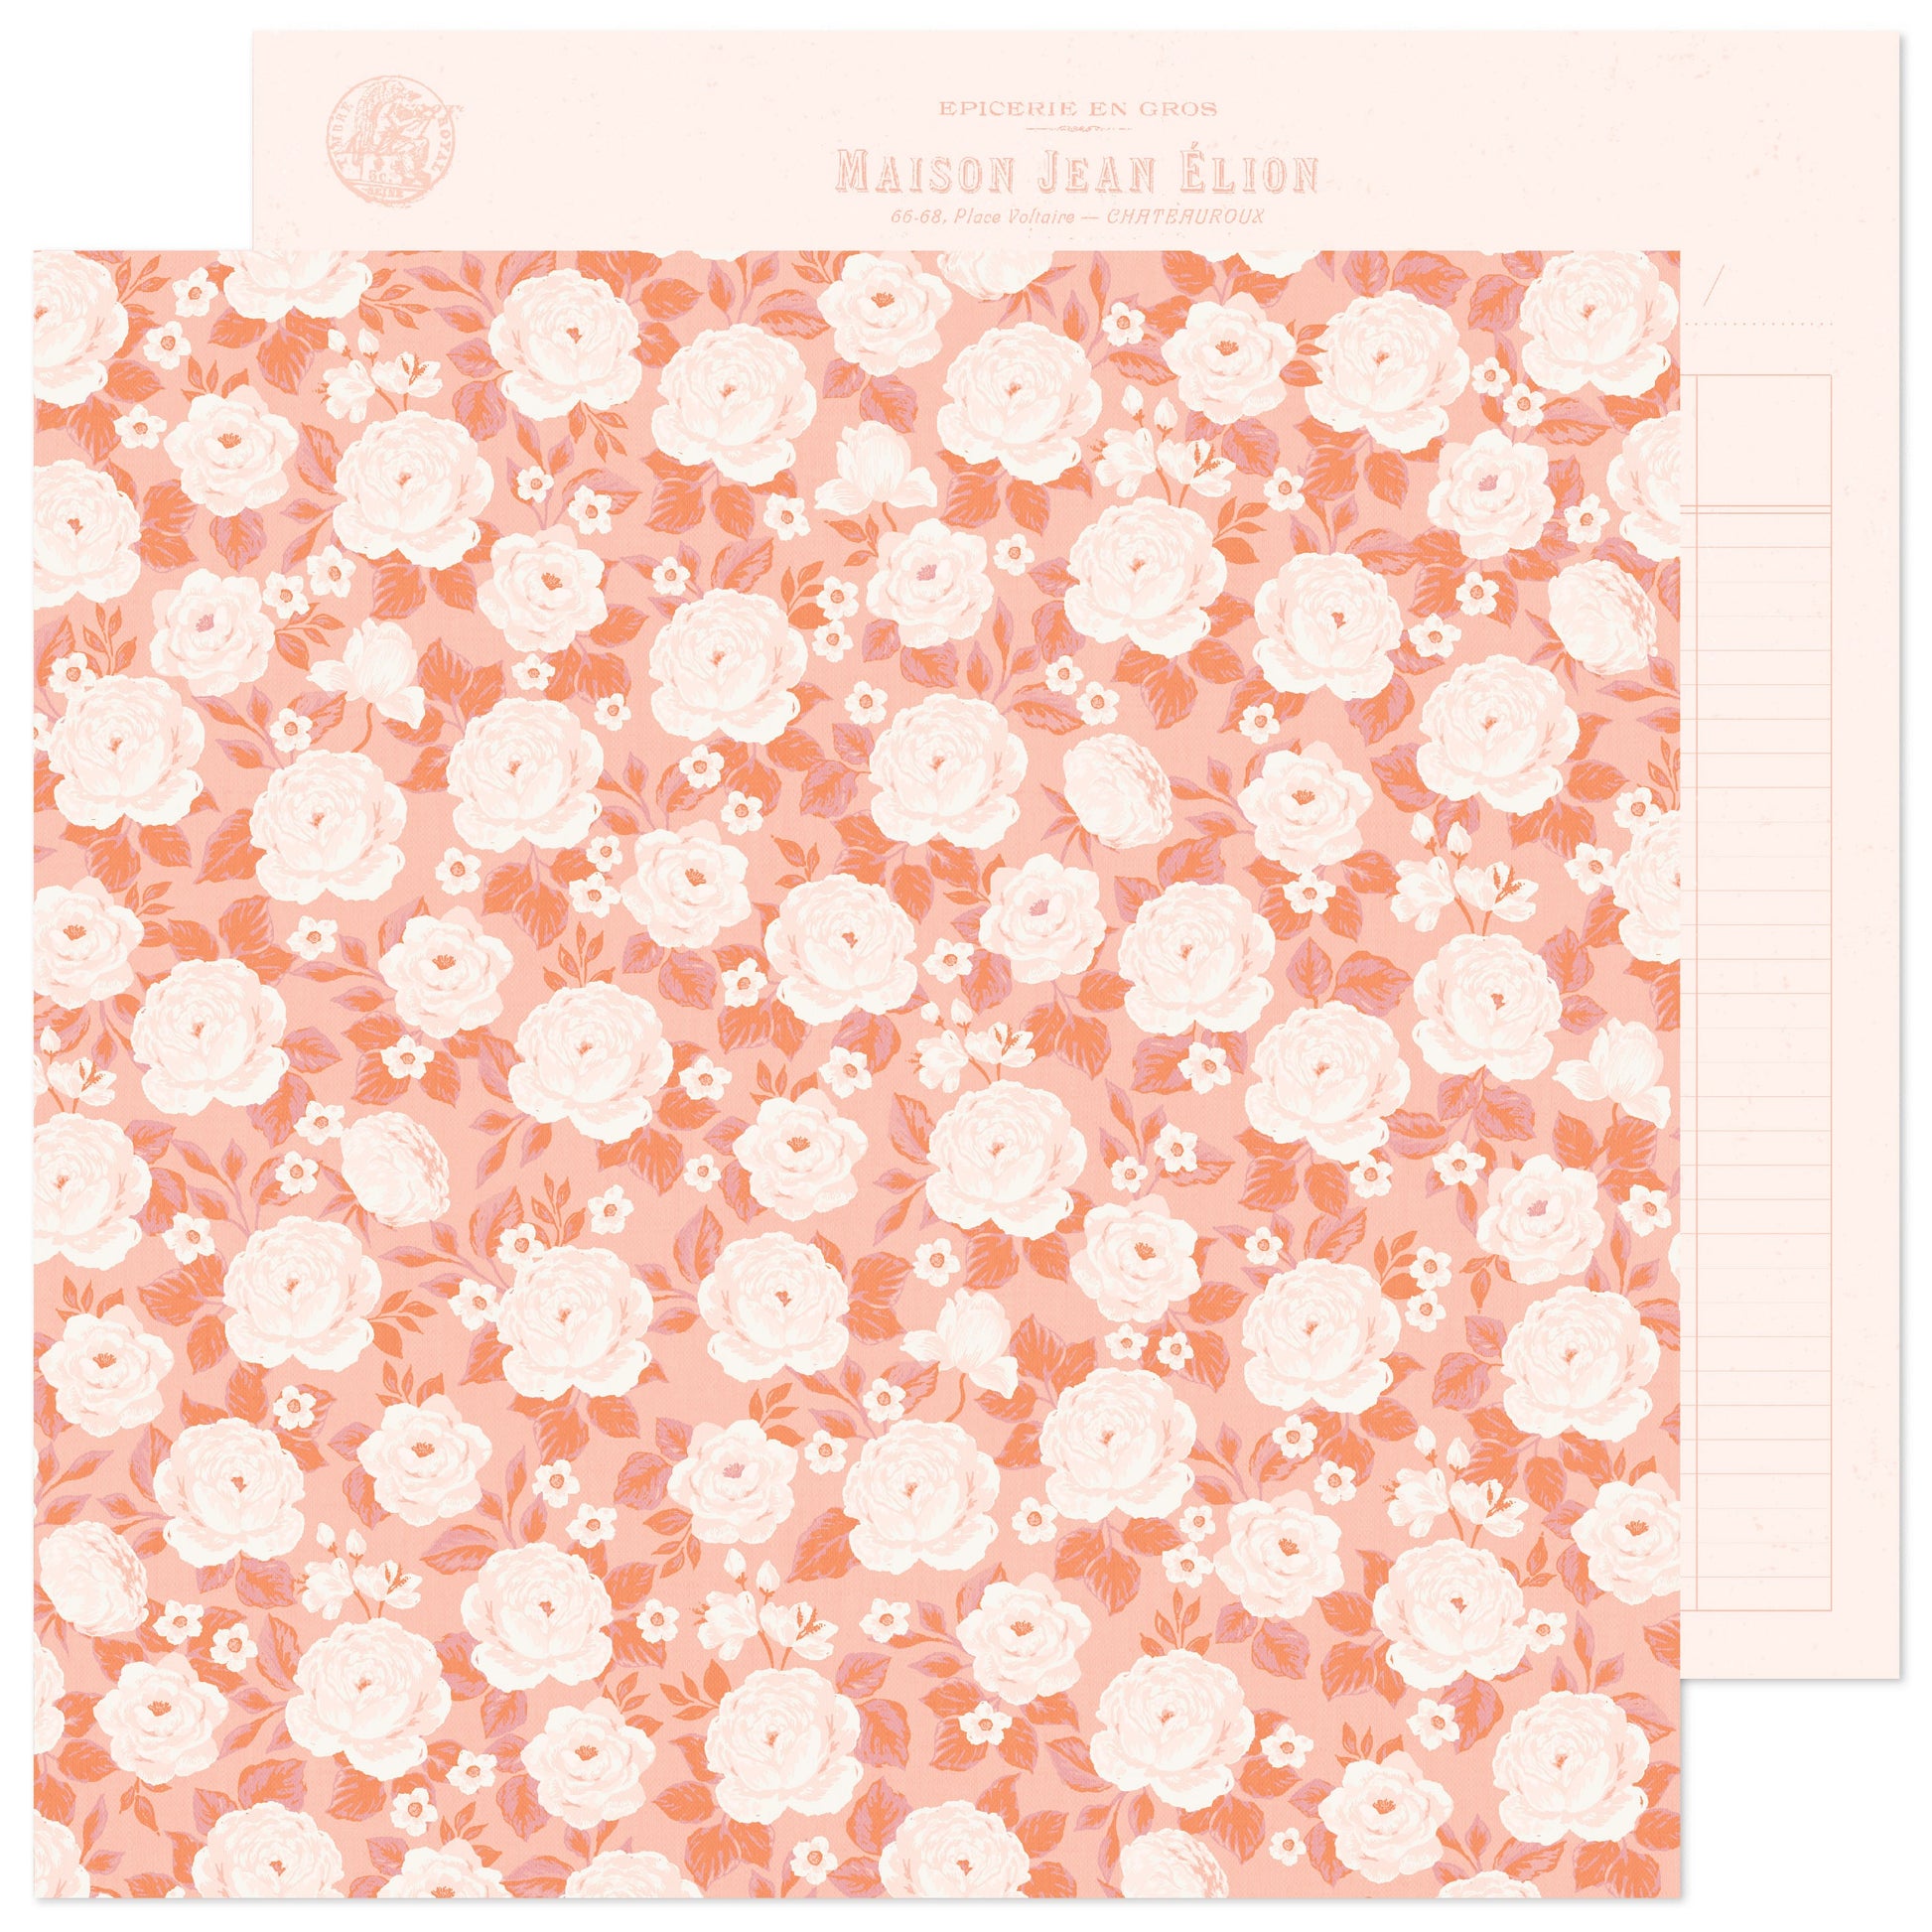 Pretty Pink Floral Scrapbook Page » Maggie Holmes Design